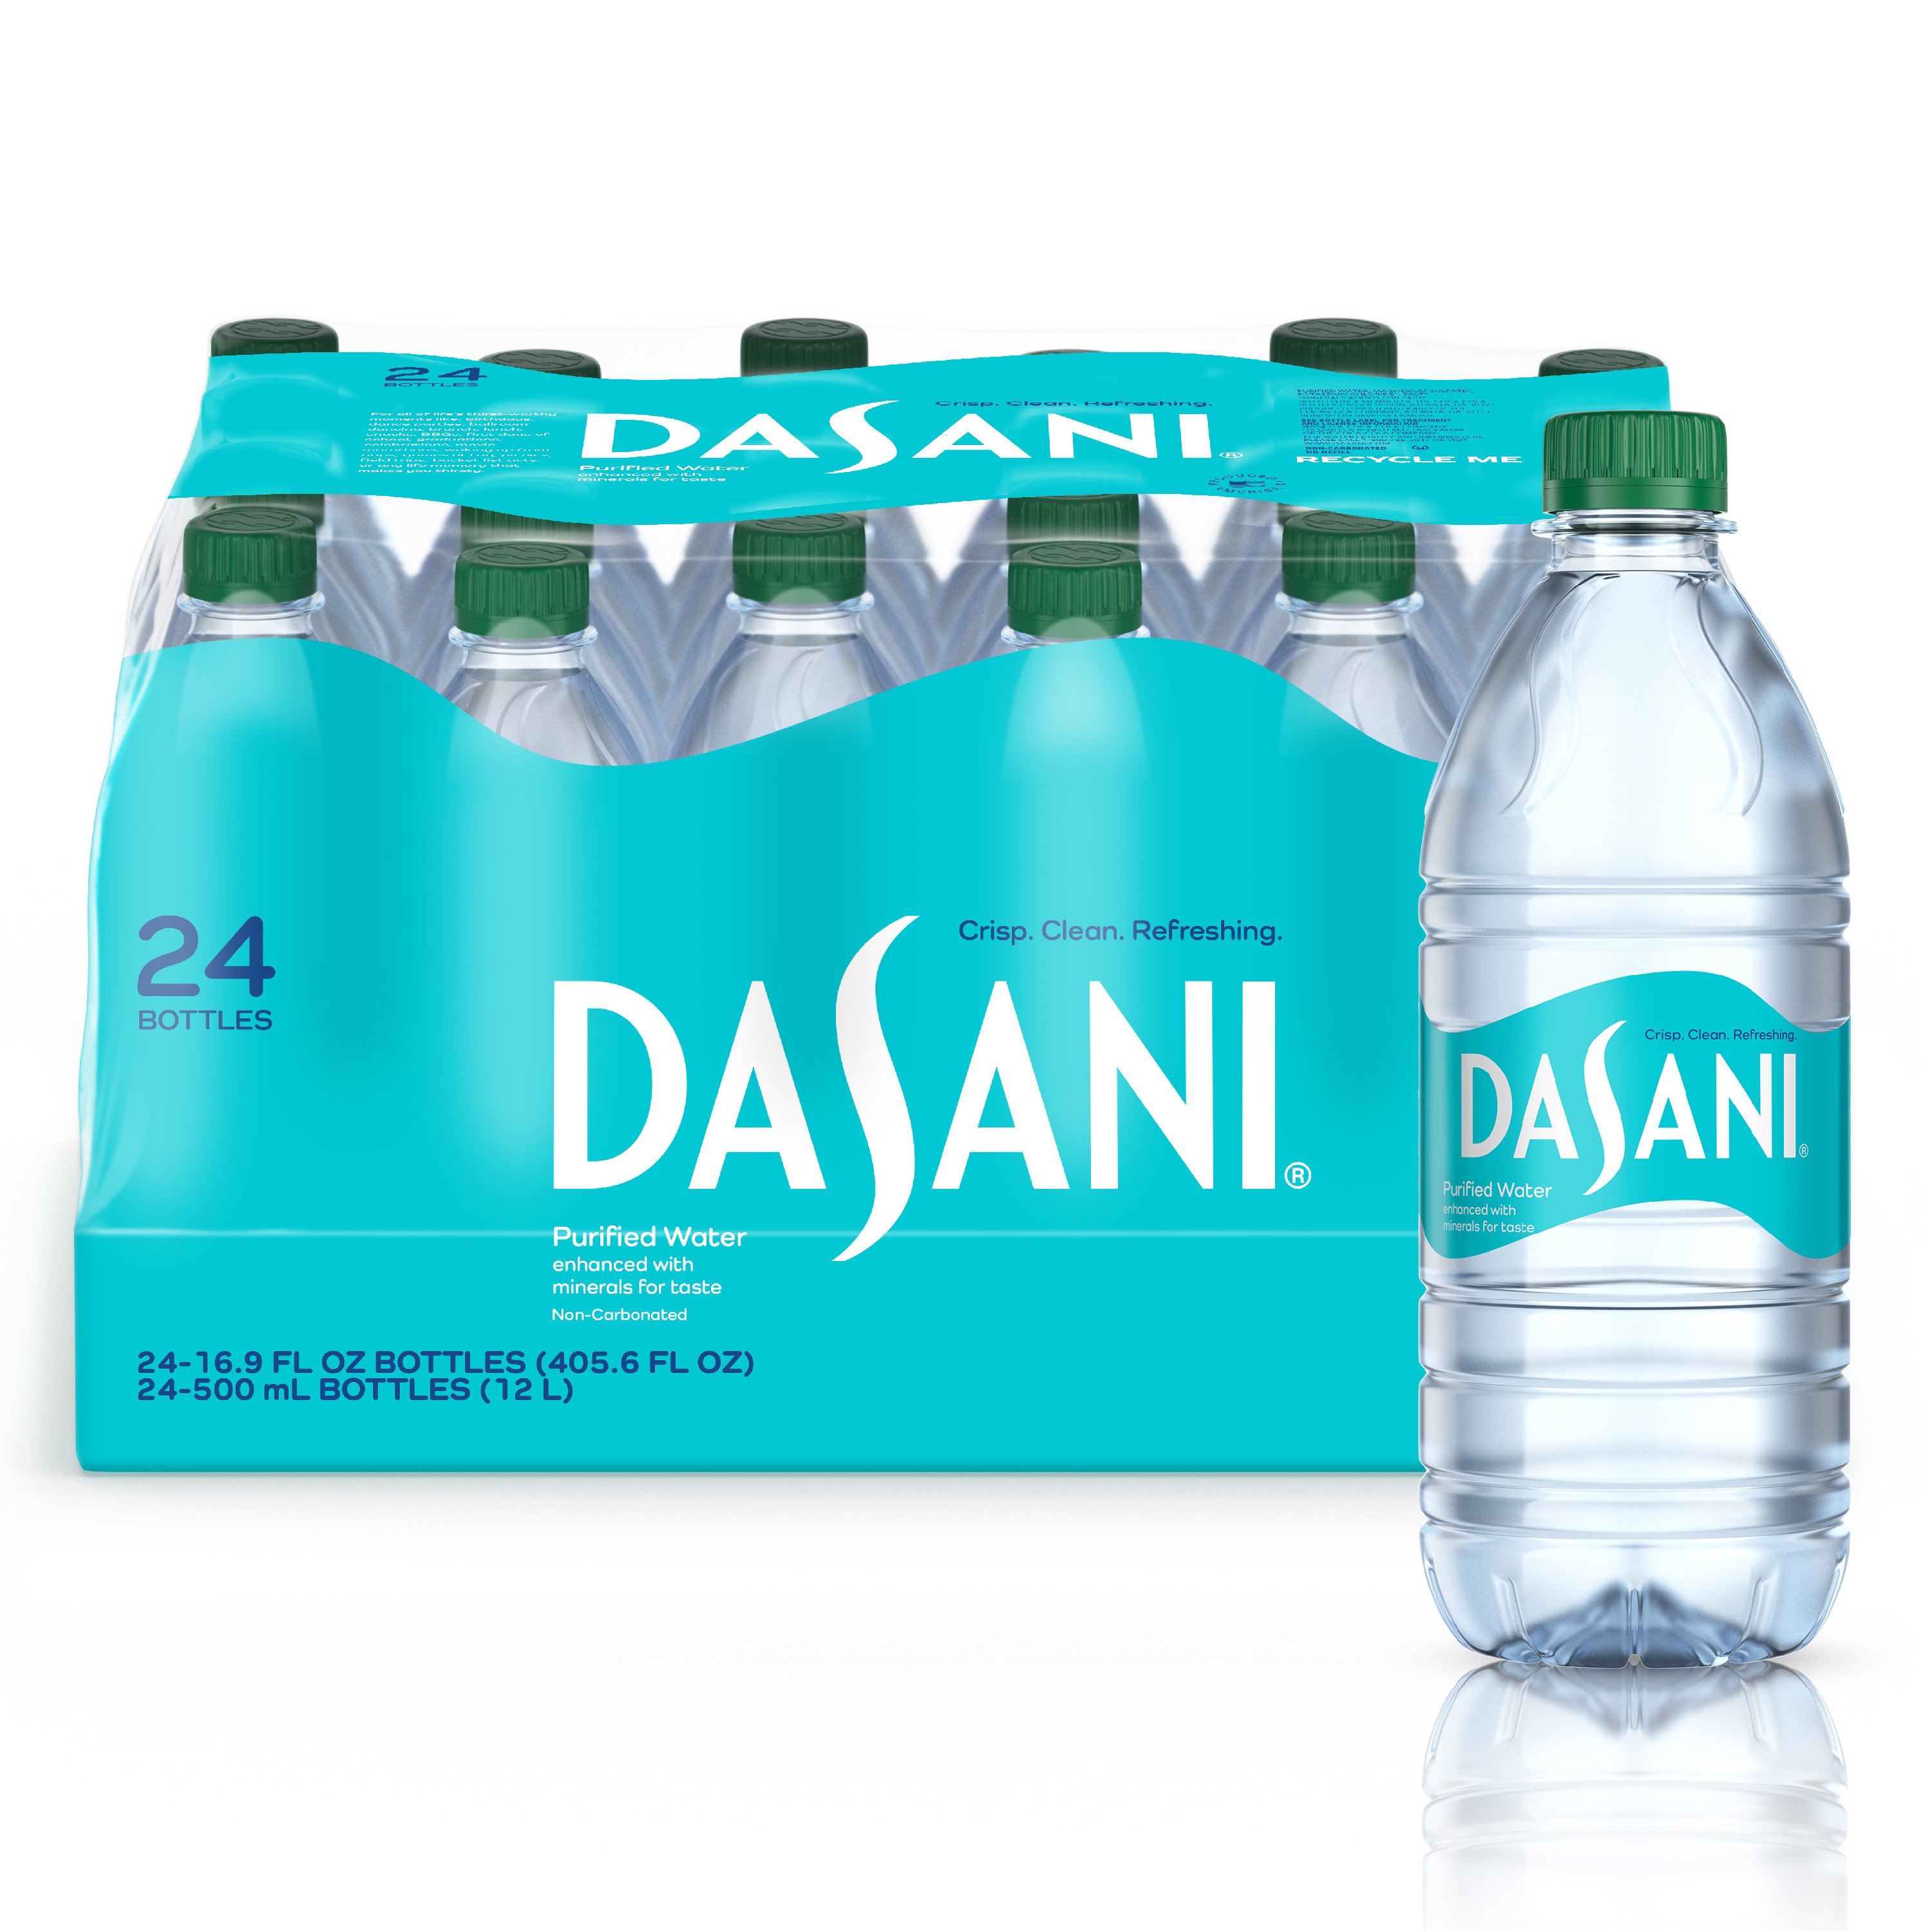 Dasani Purified Water .5 L Bottles - Shop Water at H-E-B